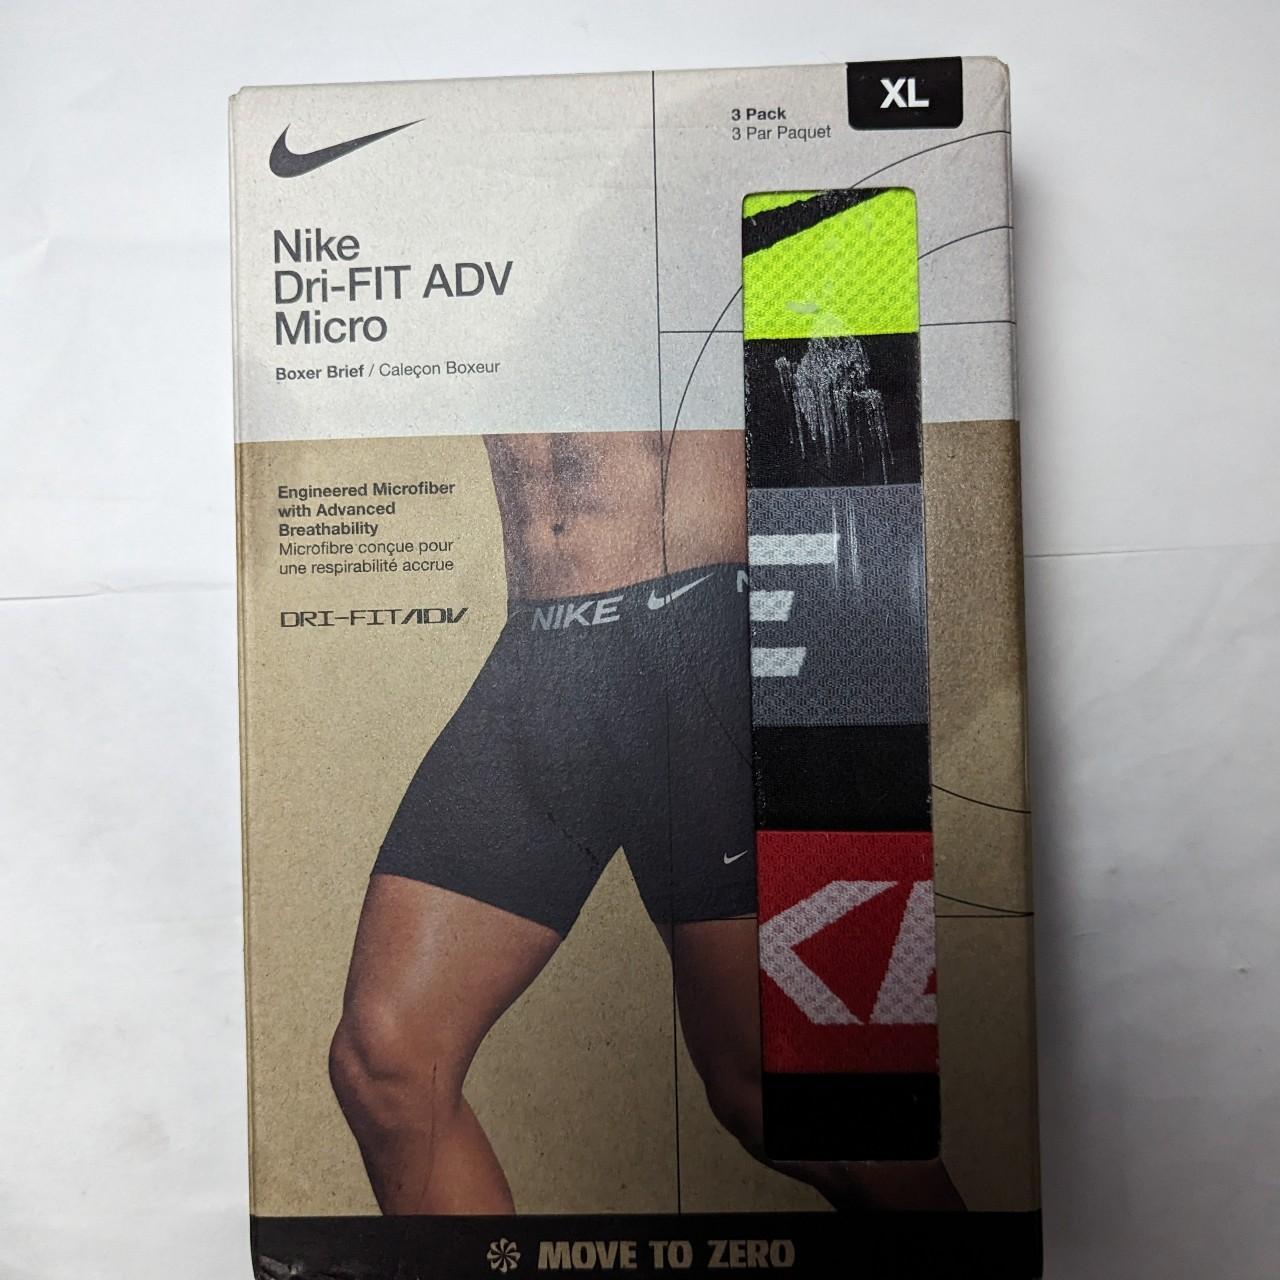 Nike Dri-FIT adv Mico Boxer Briefs xl - Depop